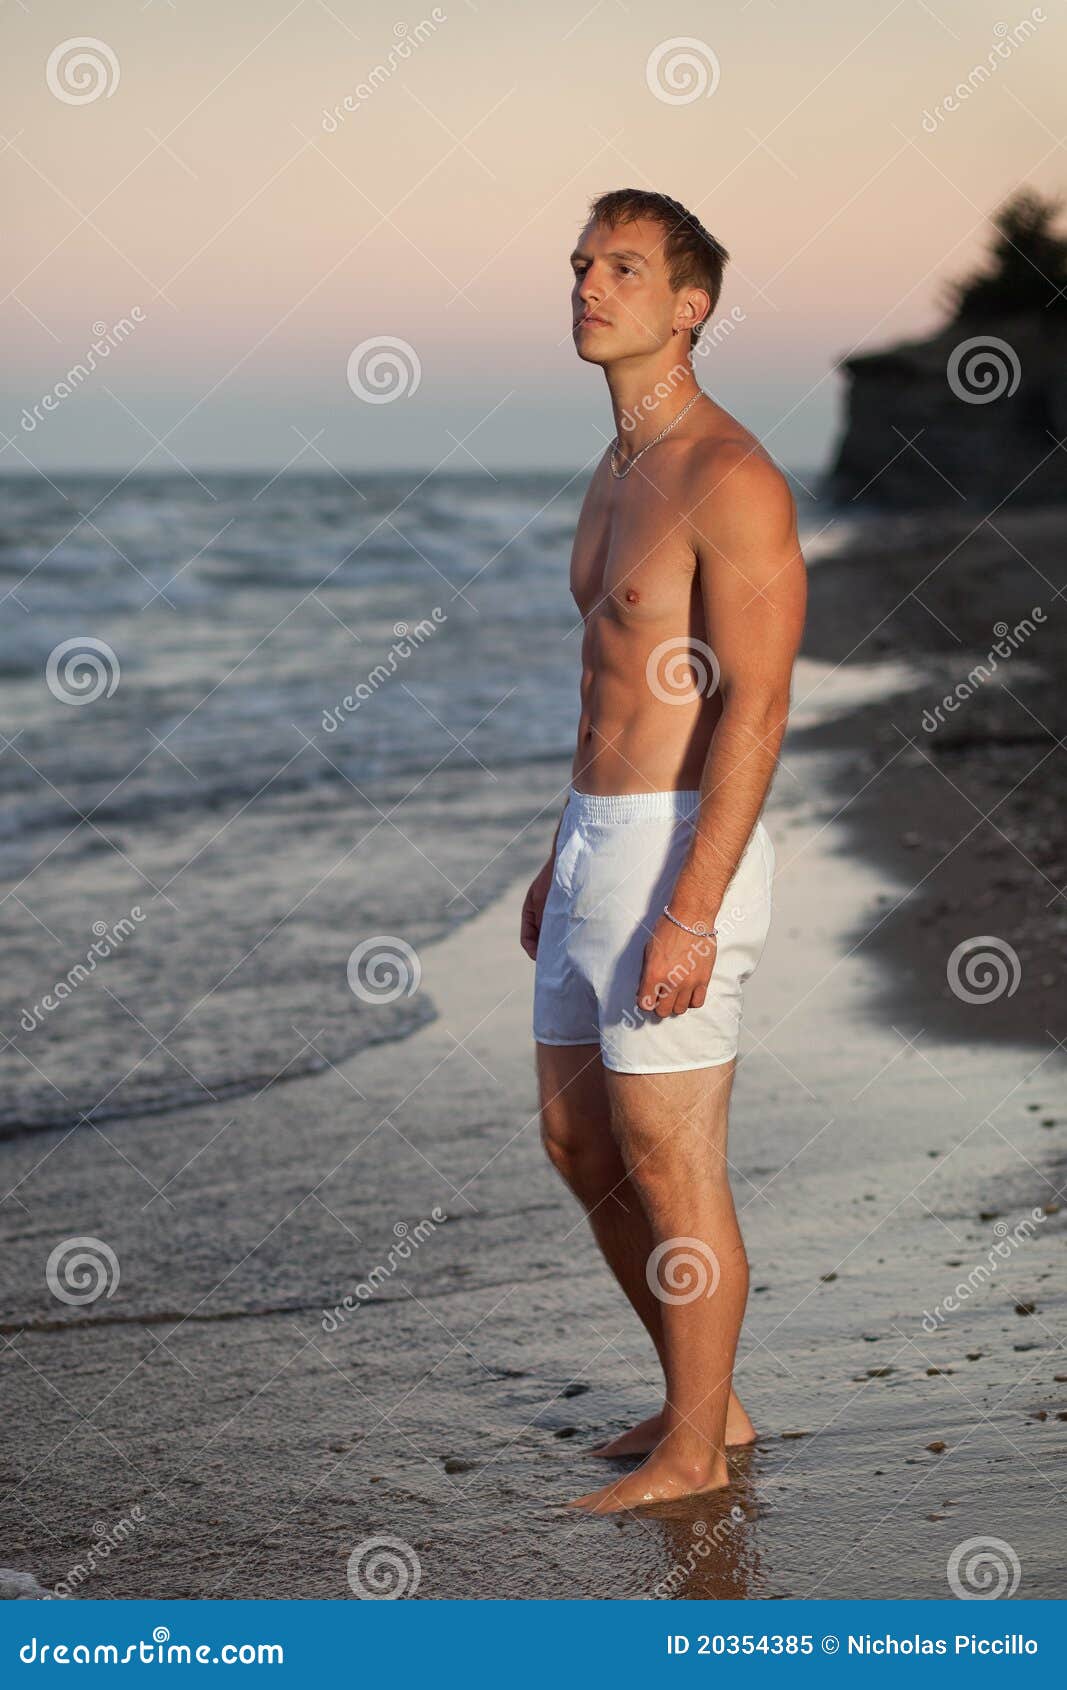 Underwear Model on Beach stock image. Image of shorts - 20354385